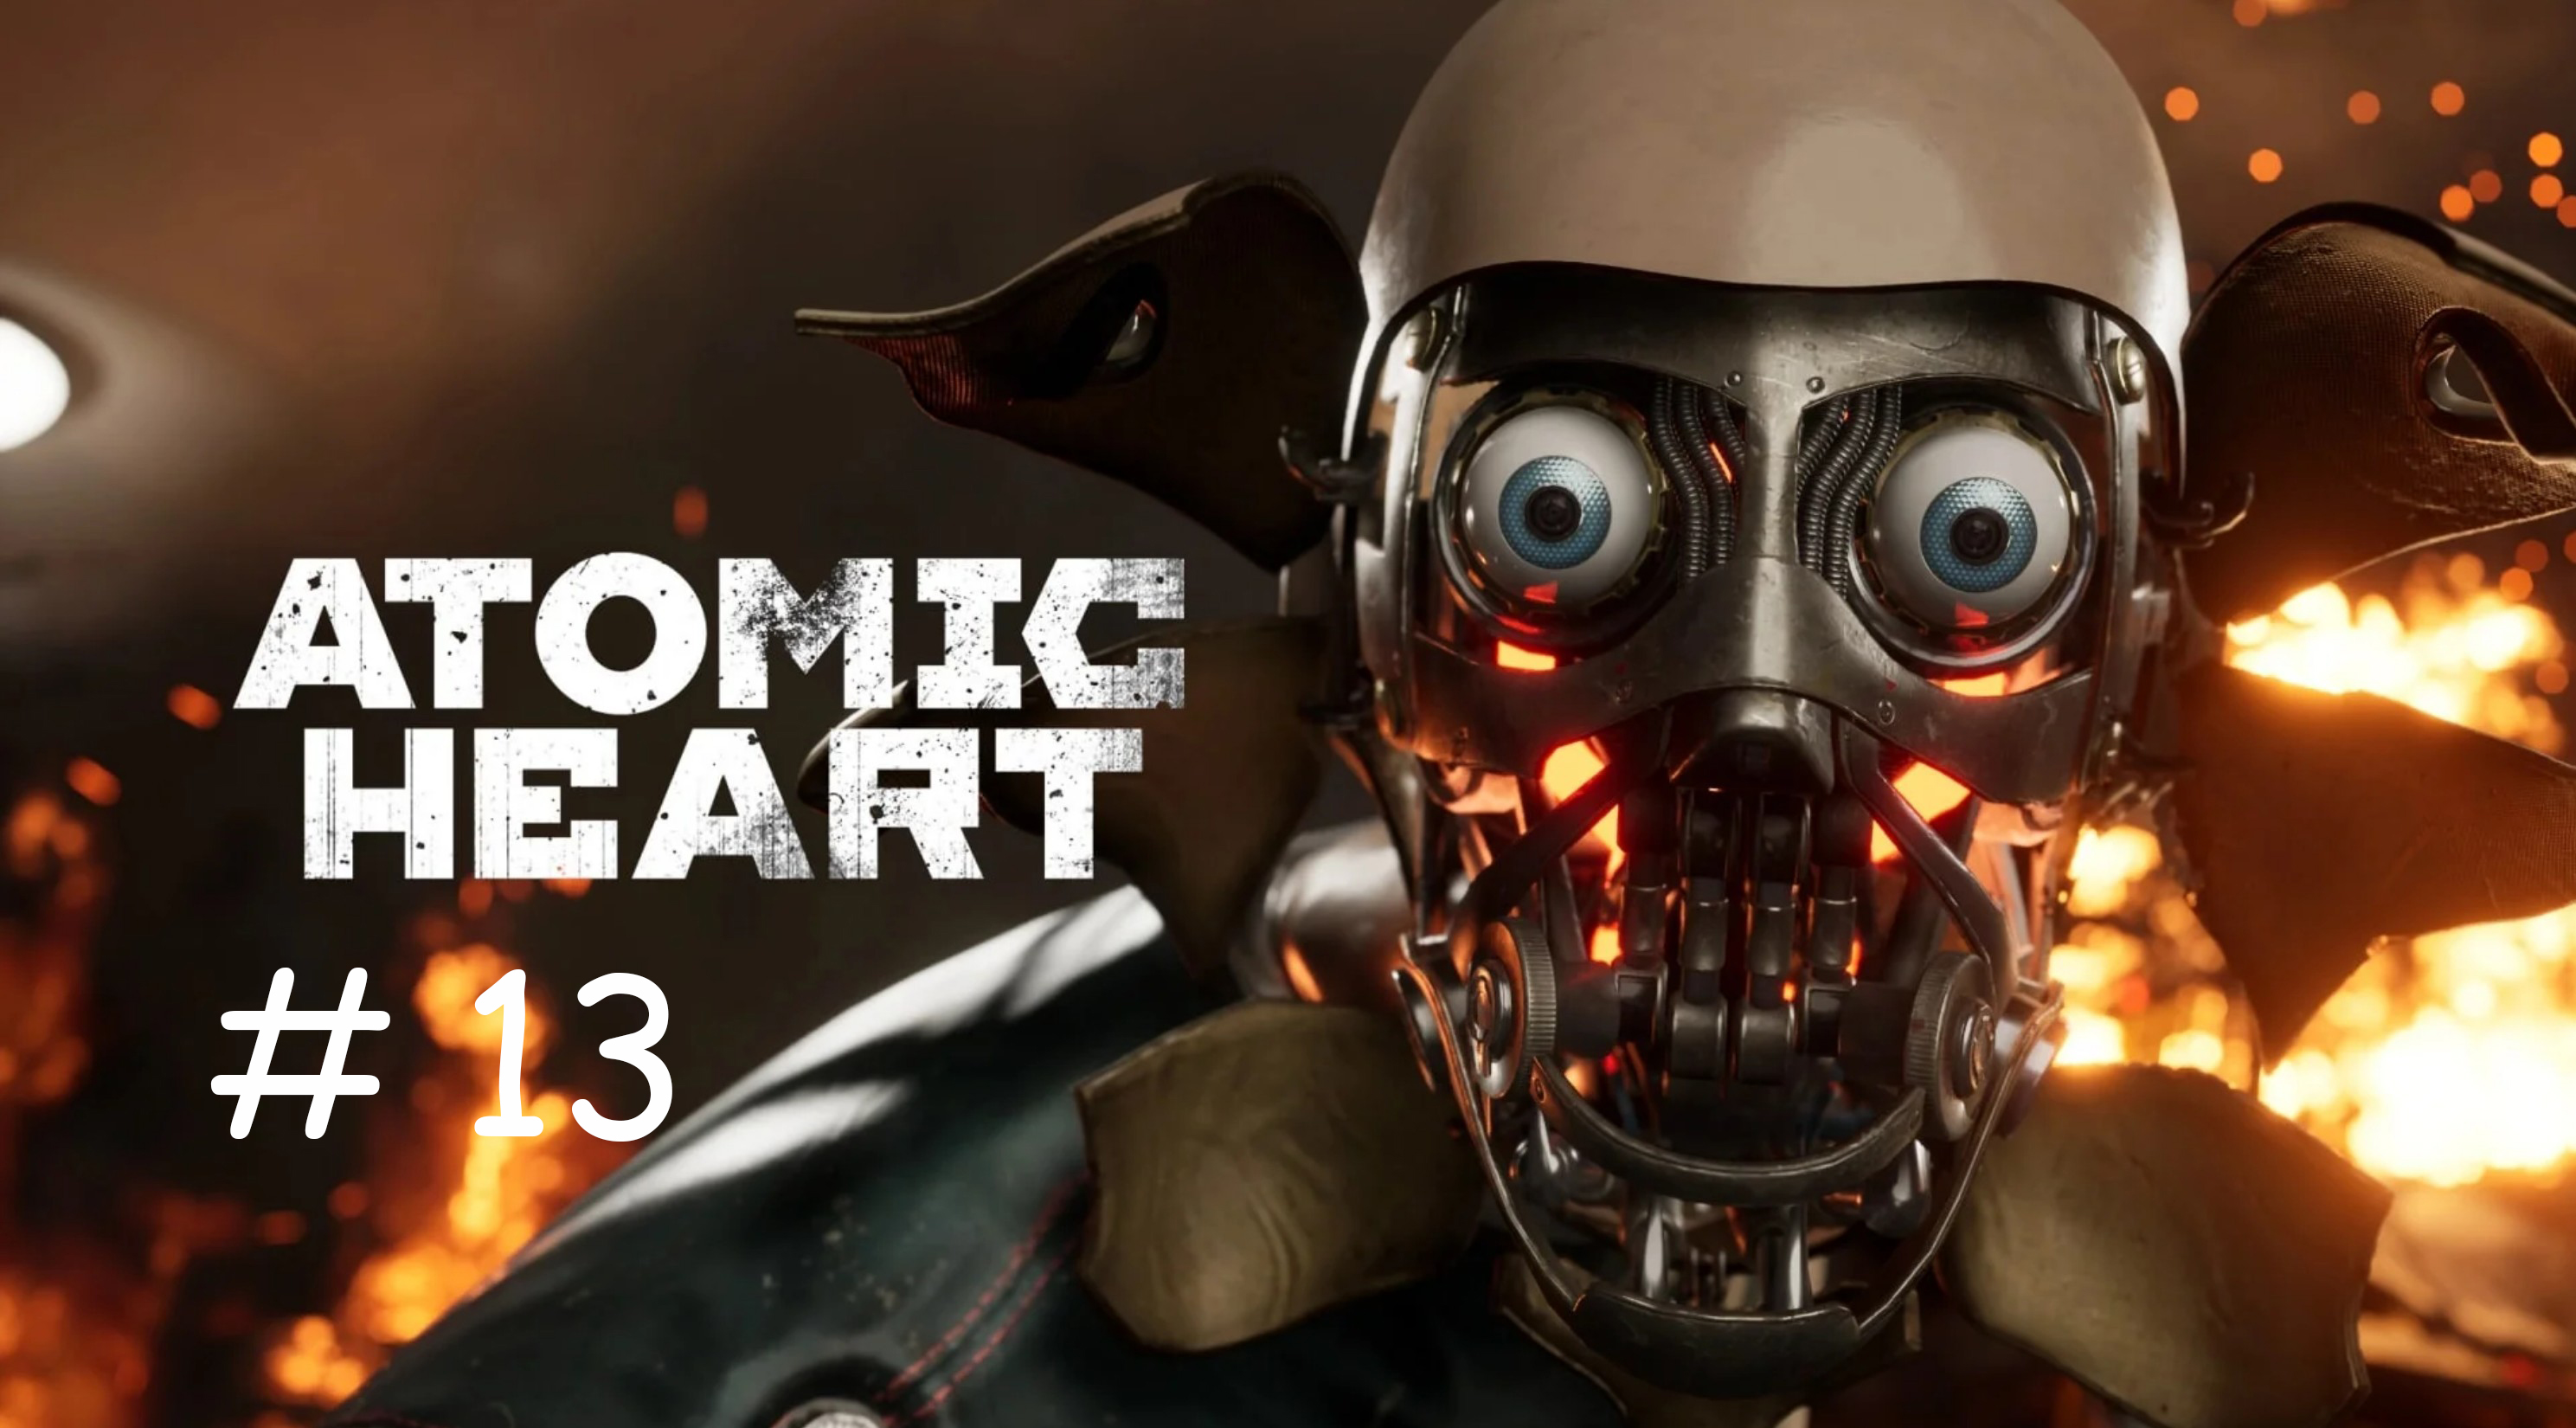 Atomic Heart # 13